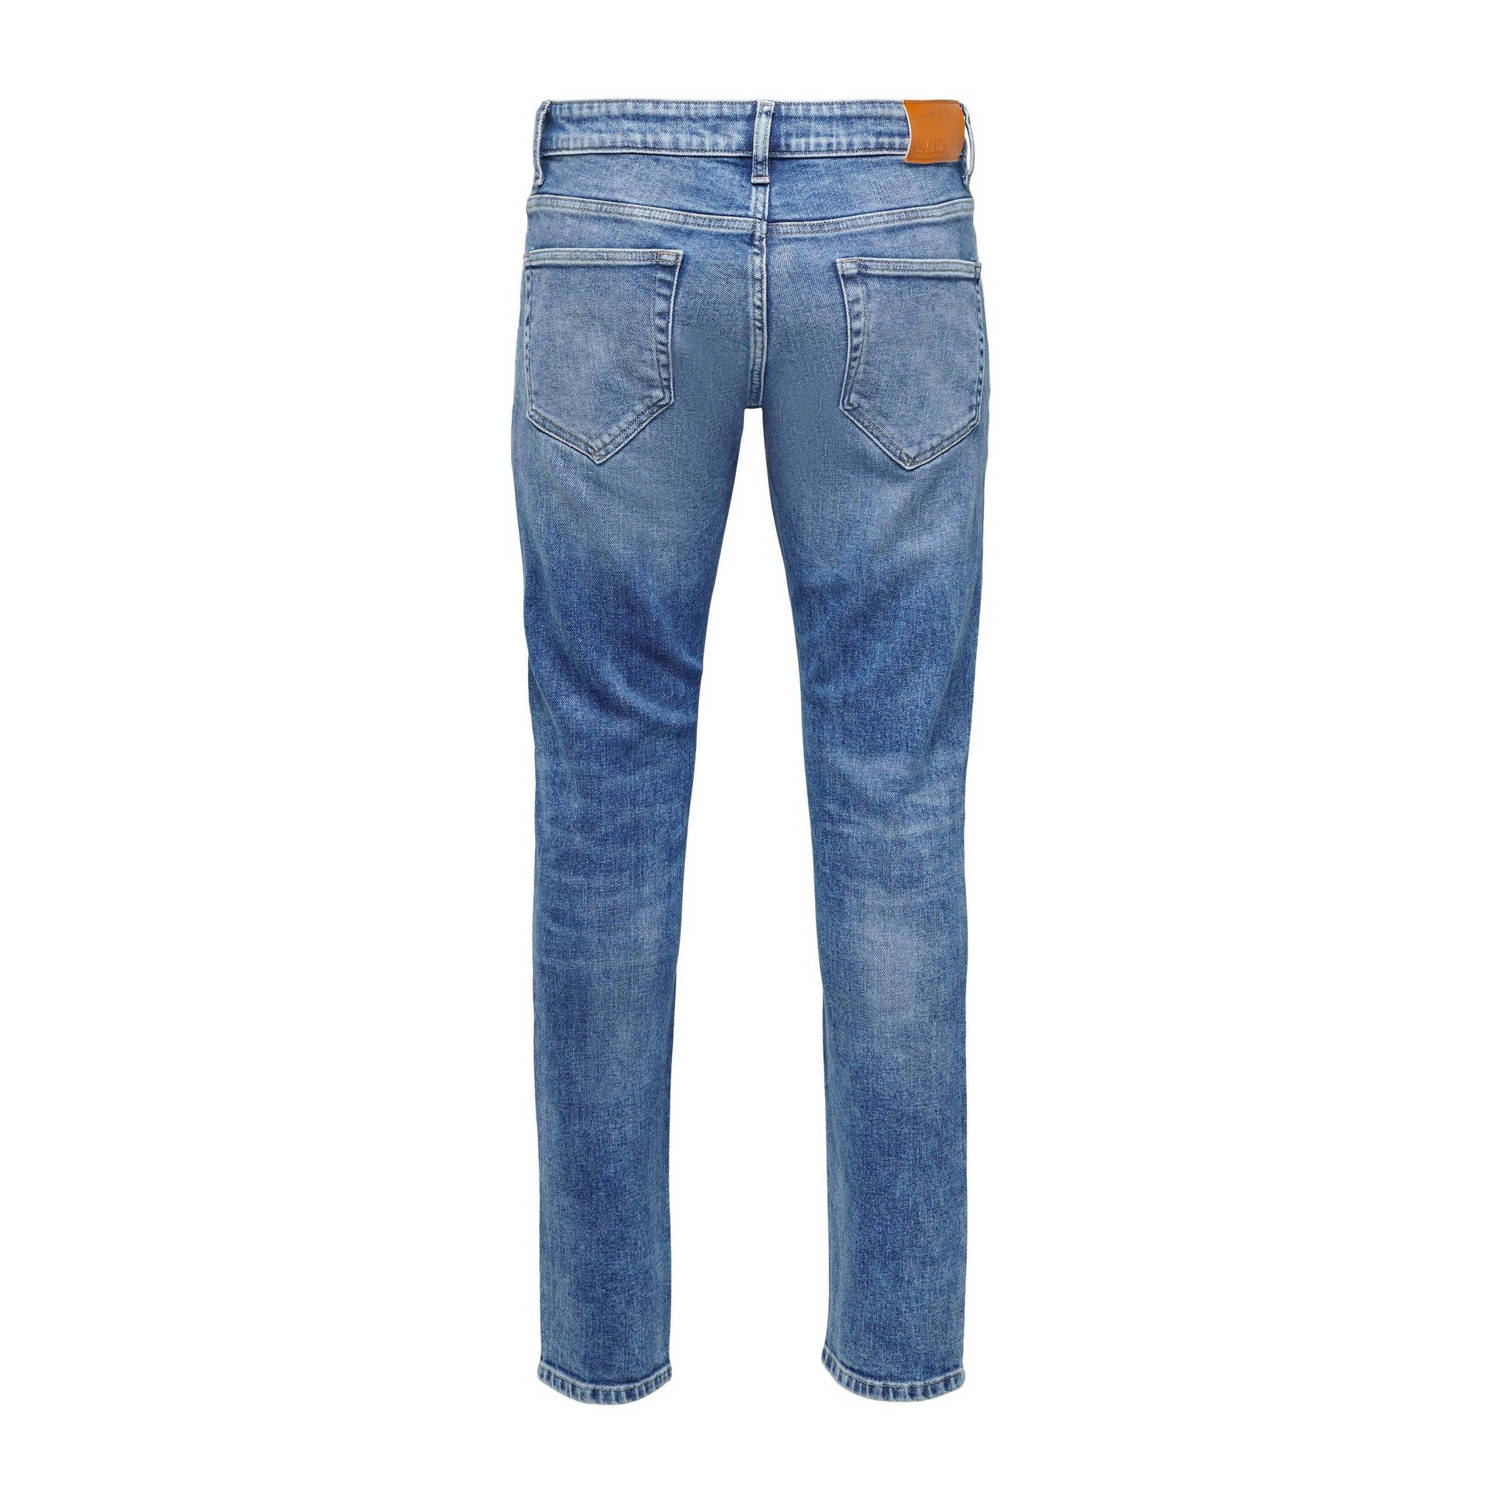 ONLY & SONS regular fit jeans ONSWEFT 5094 medium blue denim